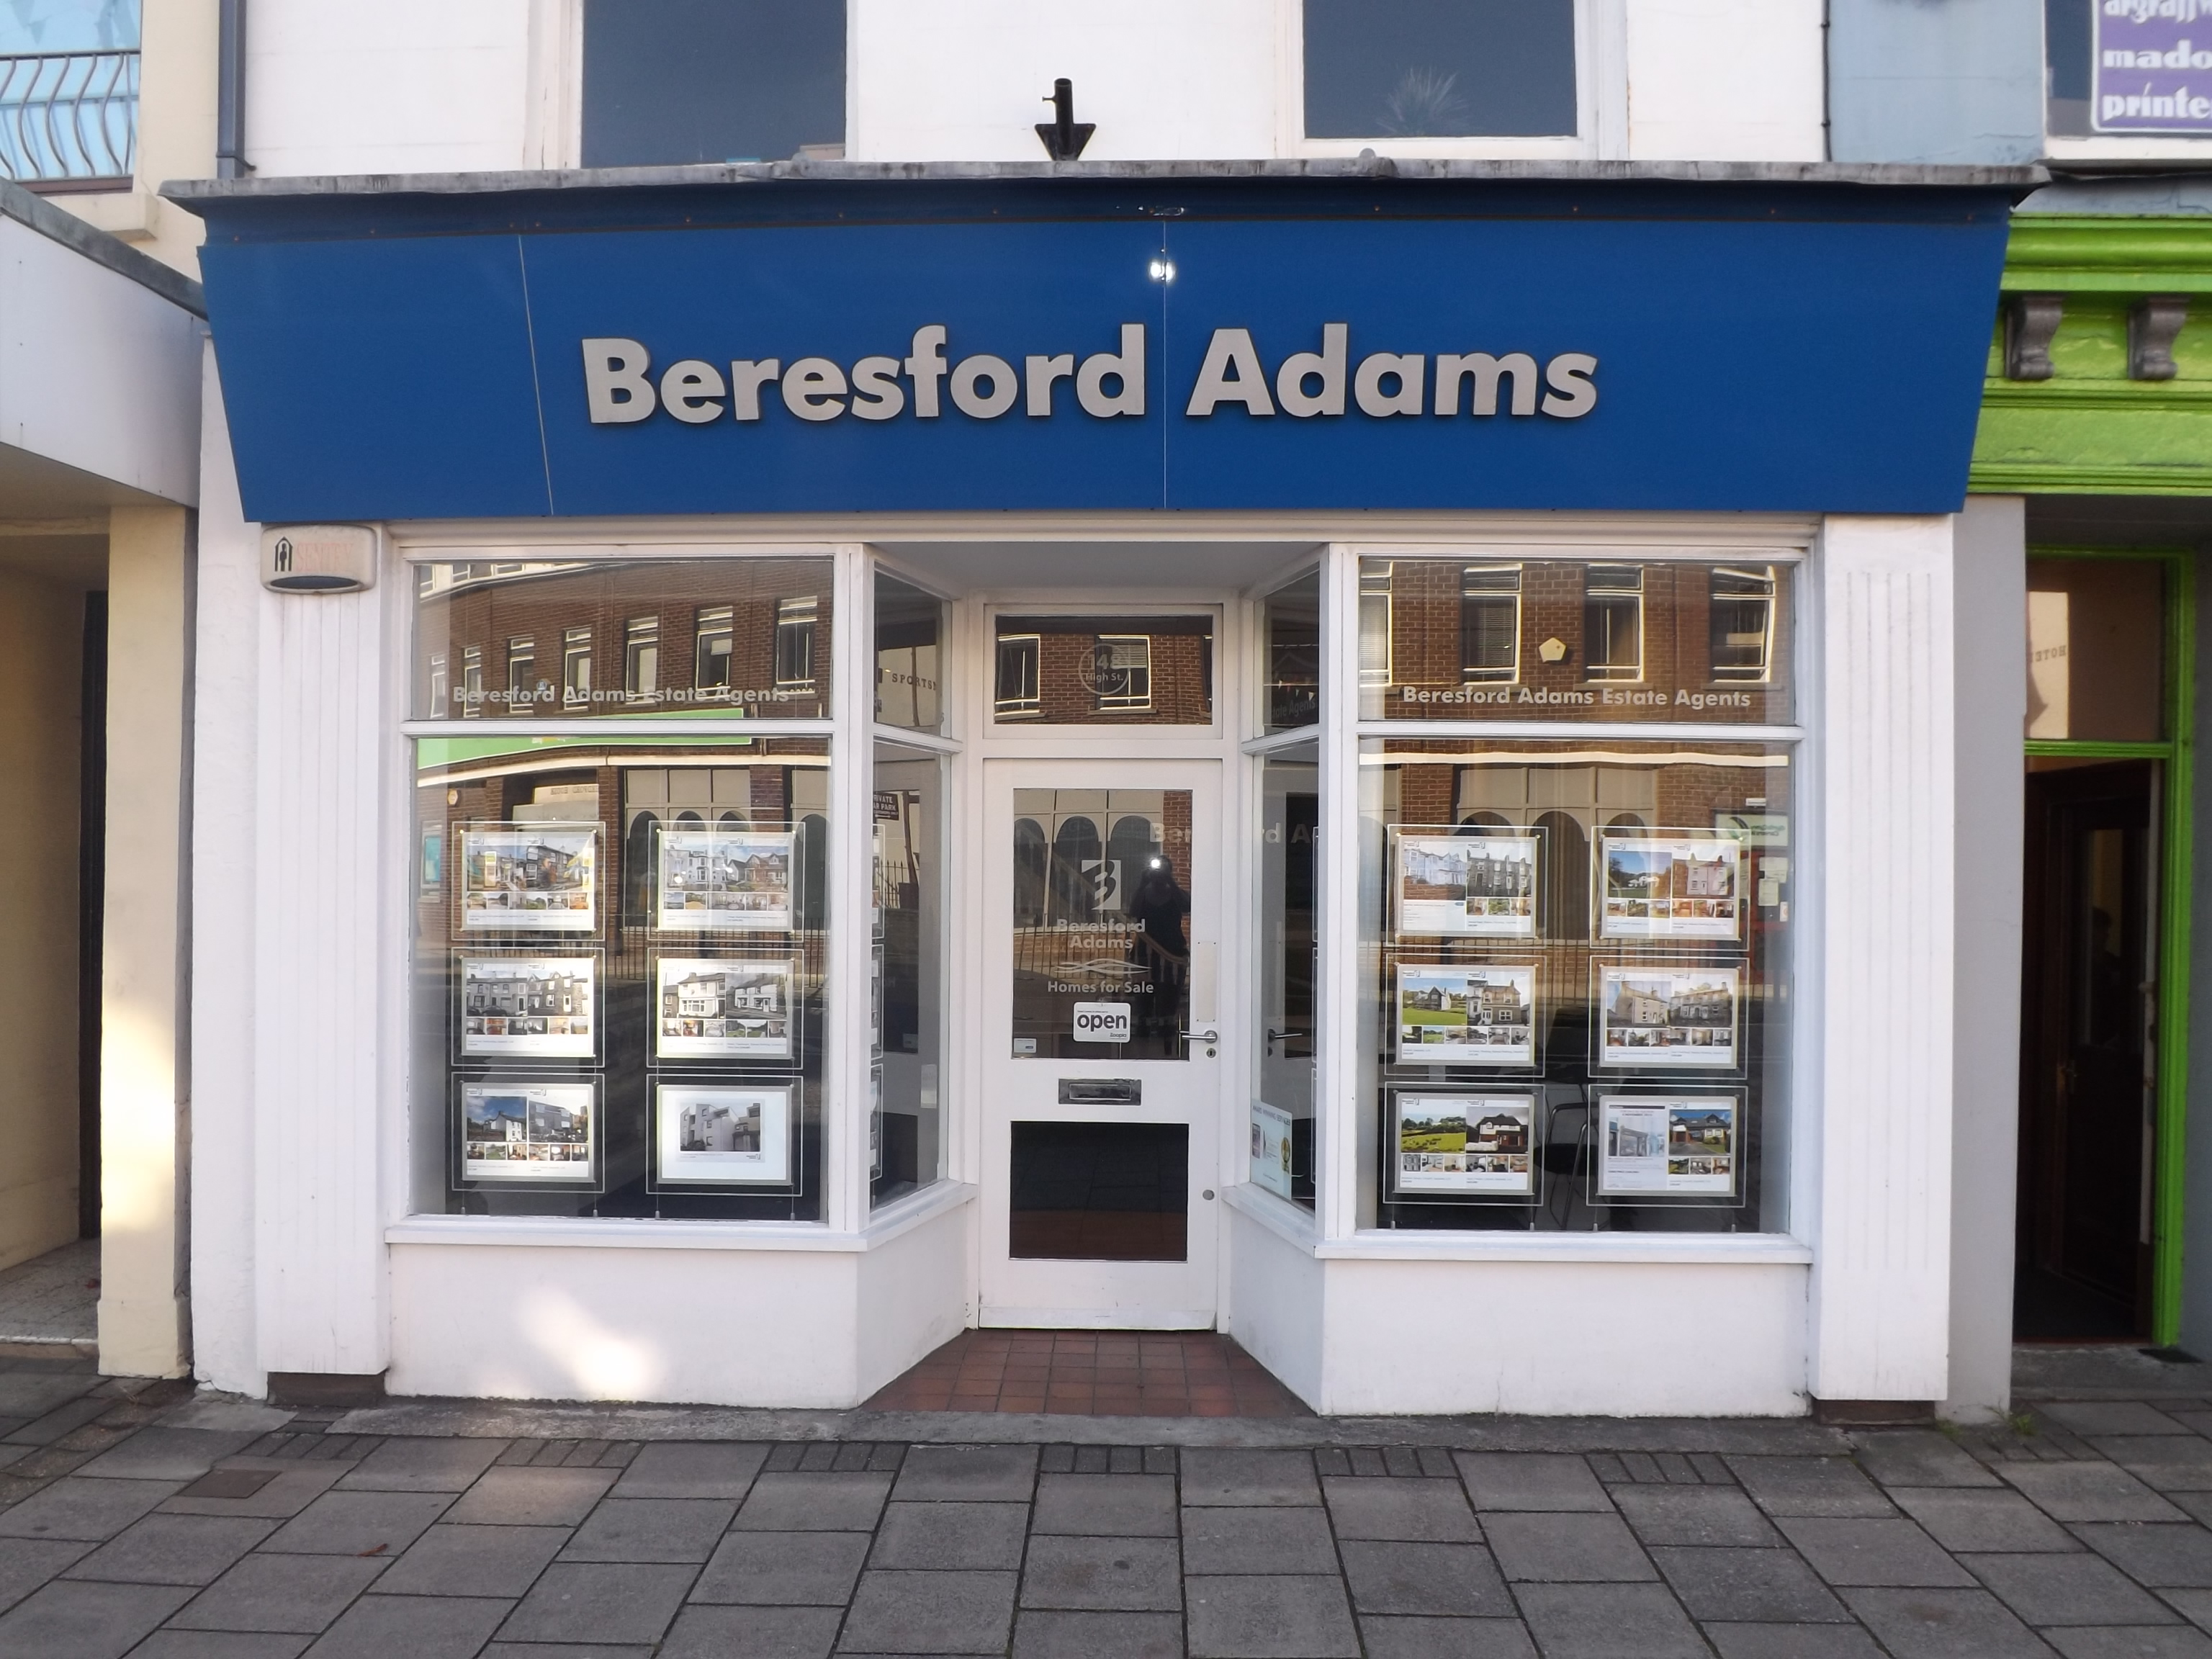 Beresford Adams Sales and Letting Agents Porthmadog Porthmadog 01766 750021